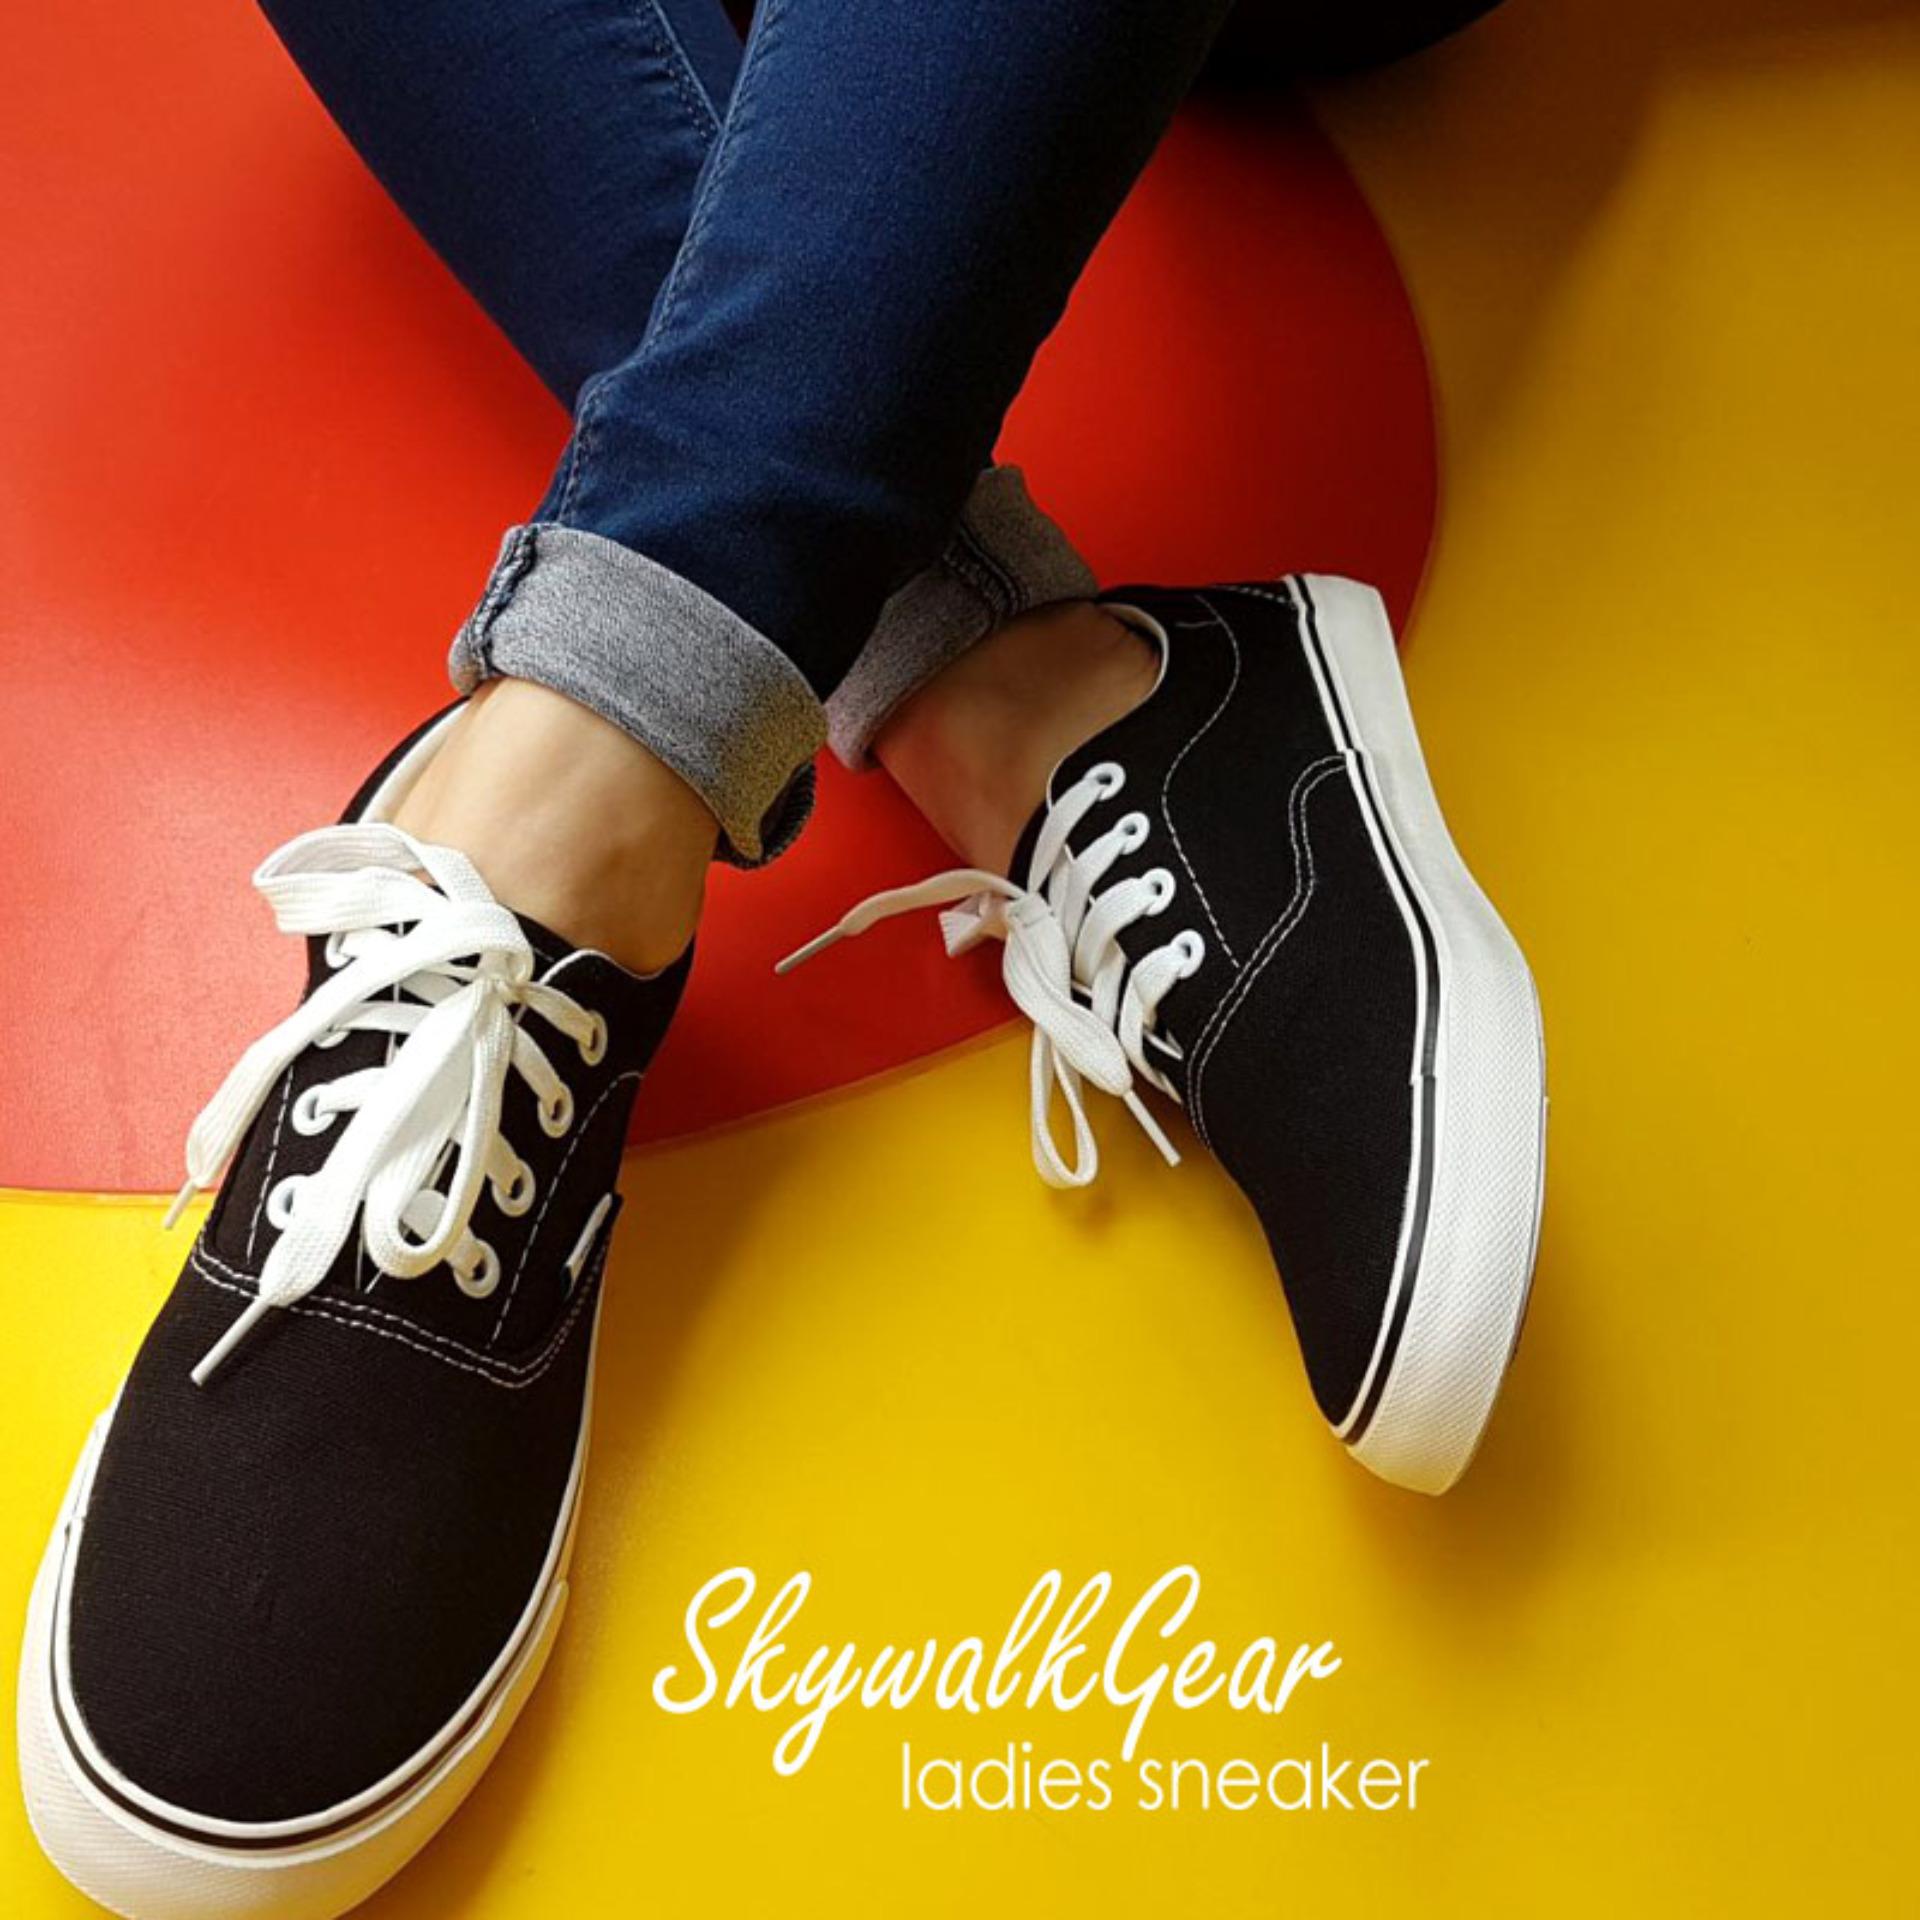 Skywalkgear Fun Women Sepatu Sneakers Wanita - B729 Black